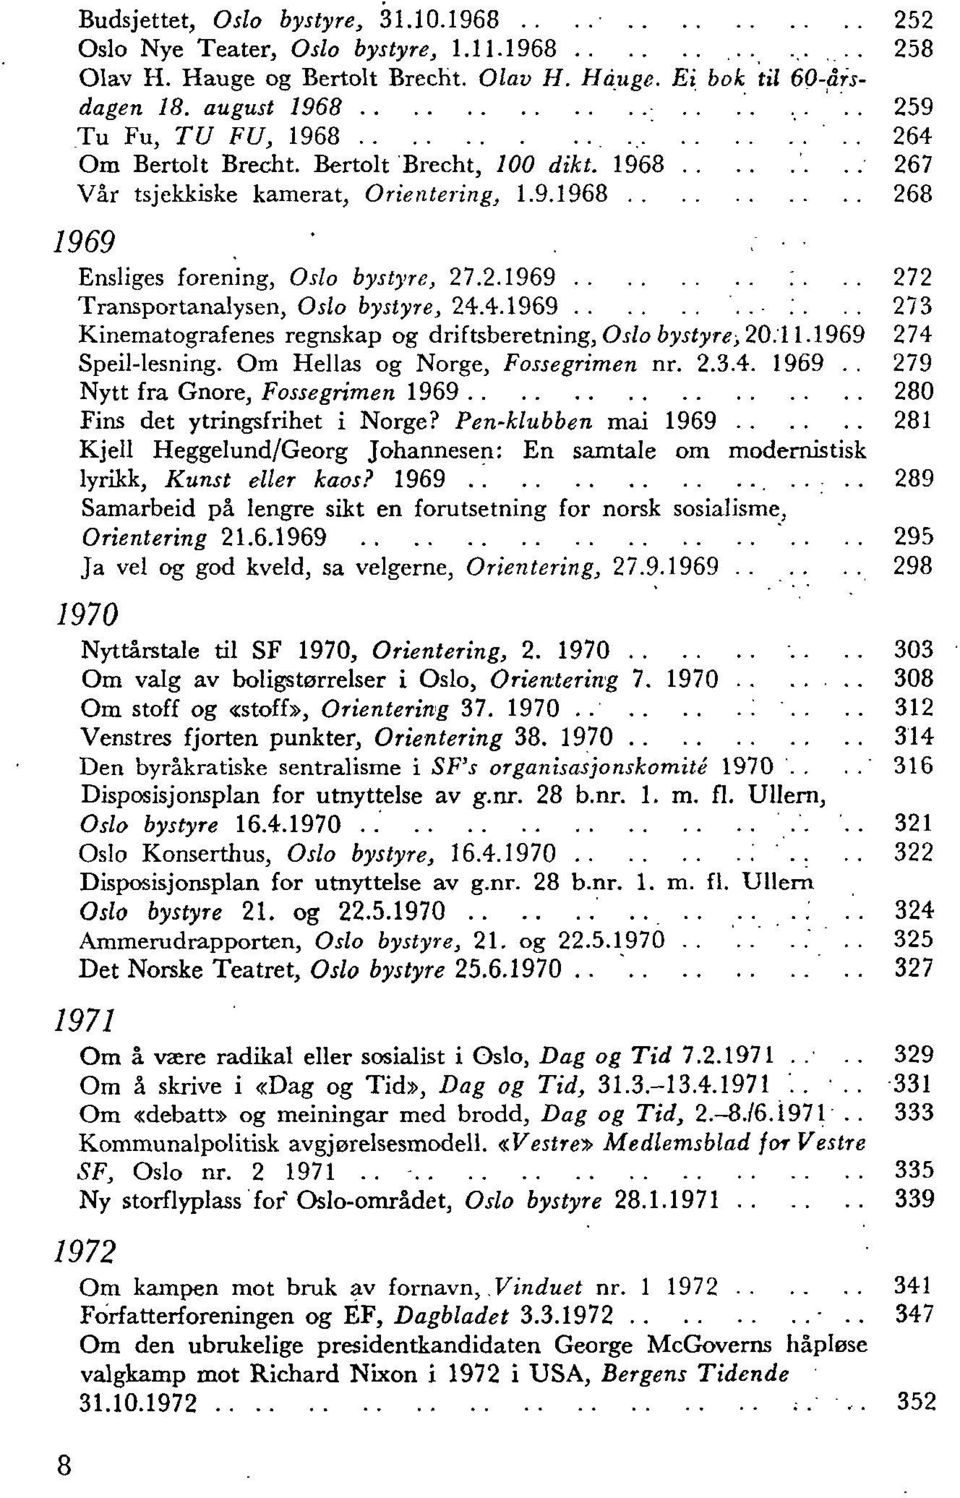 .. 272 Transportanalysen, Oslo bystyre, 24.4.1969..-.'... 273 Kinematografenes regnskap og driftsberetning, Oslo bystyre, 20.11.1969 274 Speil-lesning. Om Hellas og Norge, Fossegrimen nr. 2.3.4. 1969.